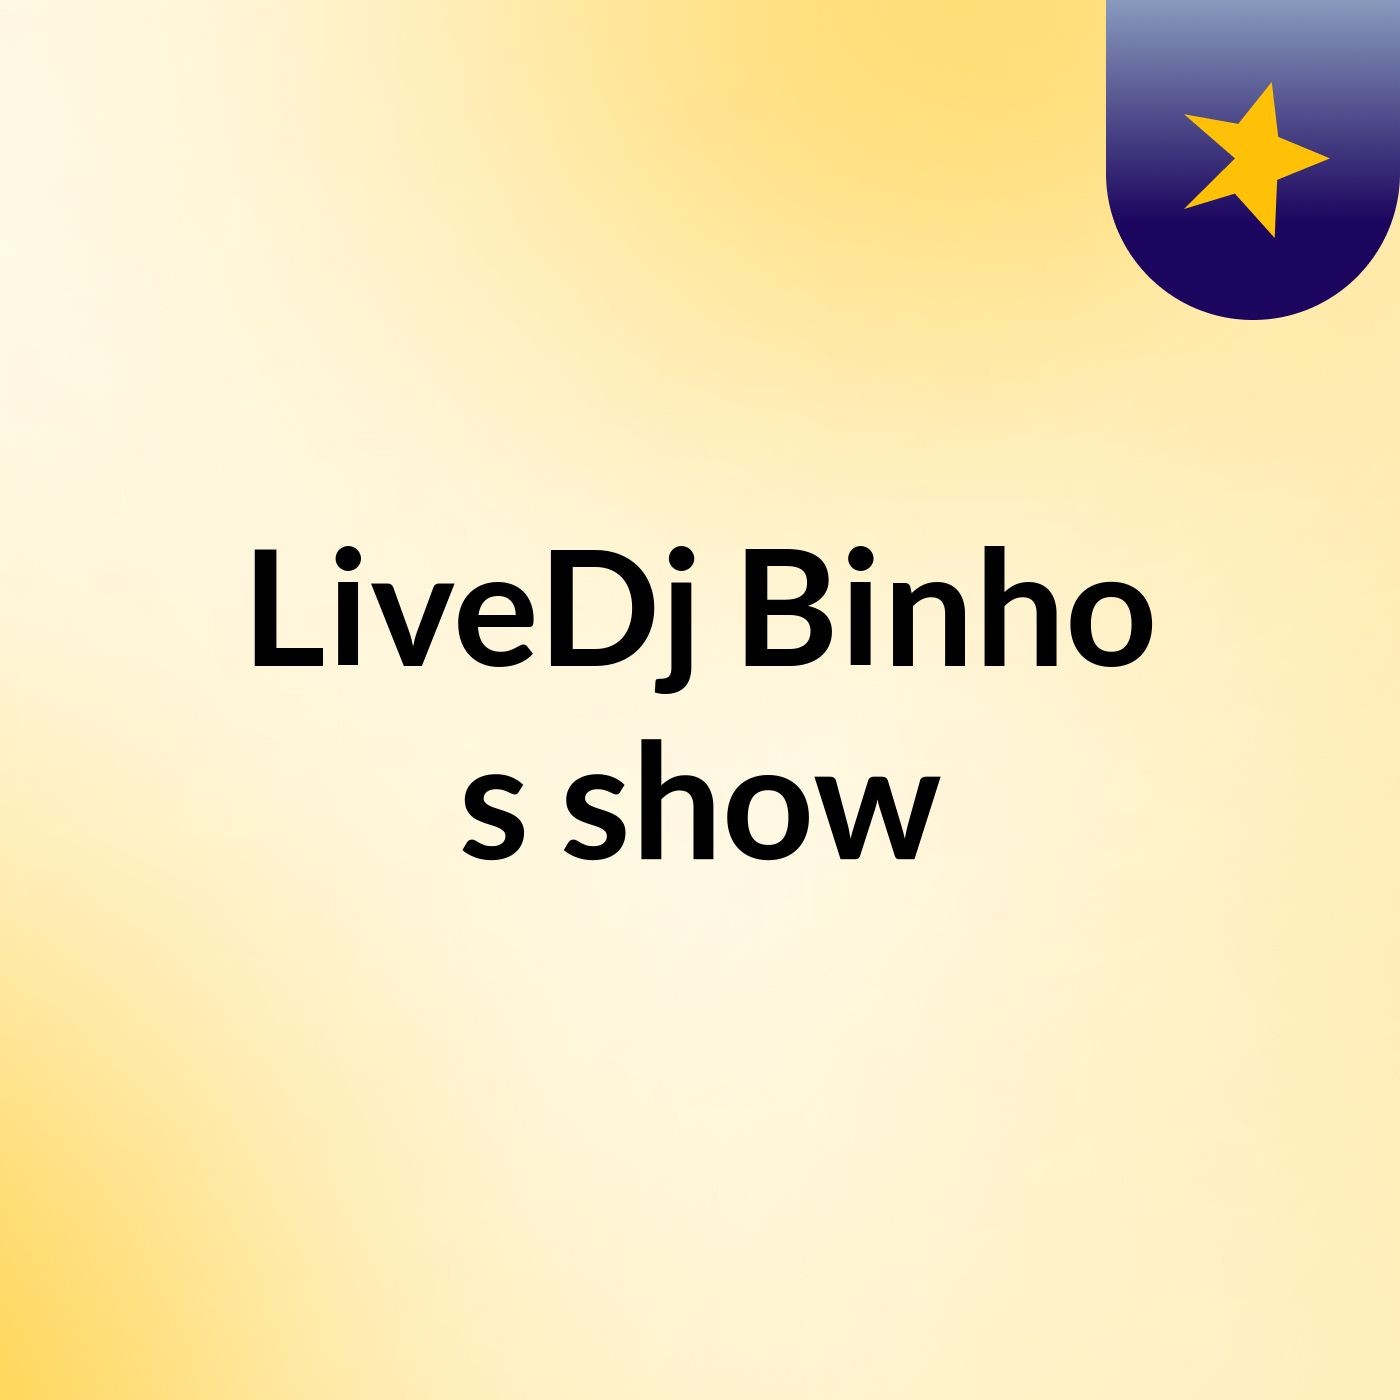 LiveDj Binho's show